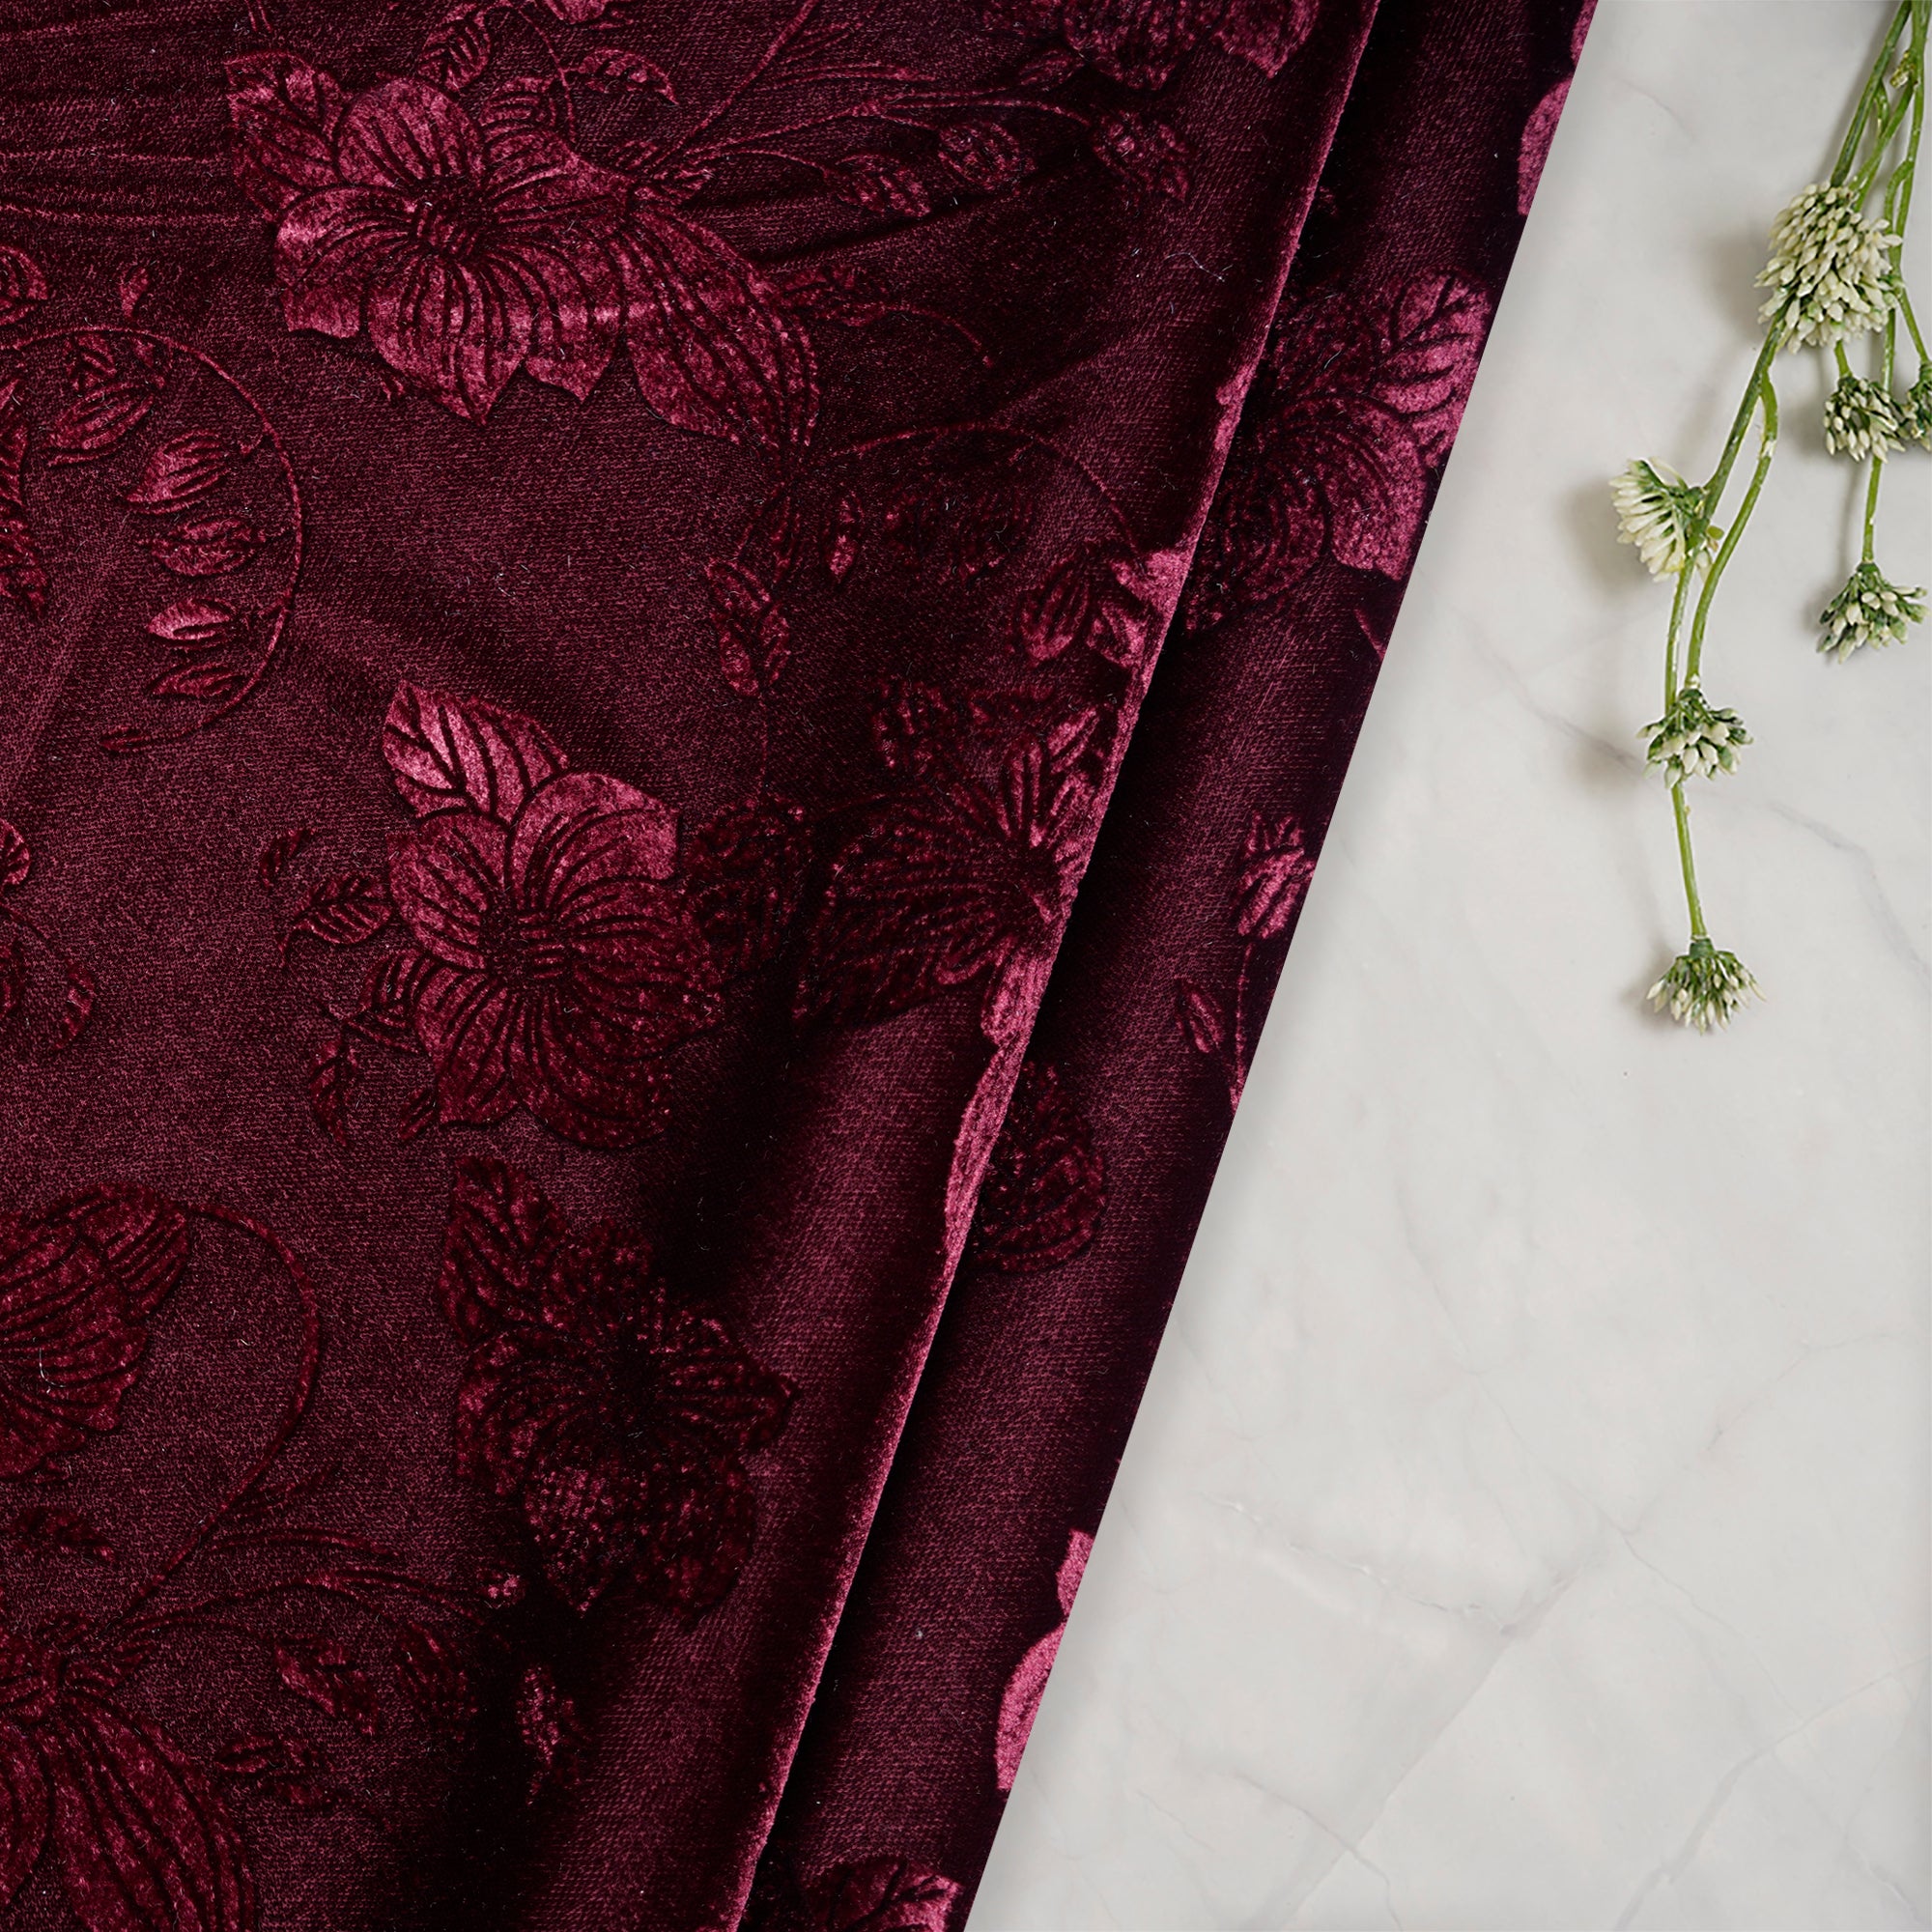 Tawny Port Floral Pattern Premium Embossed Printed Velvet Fabric